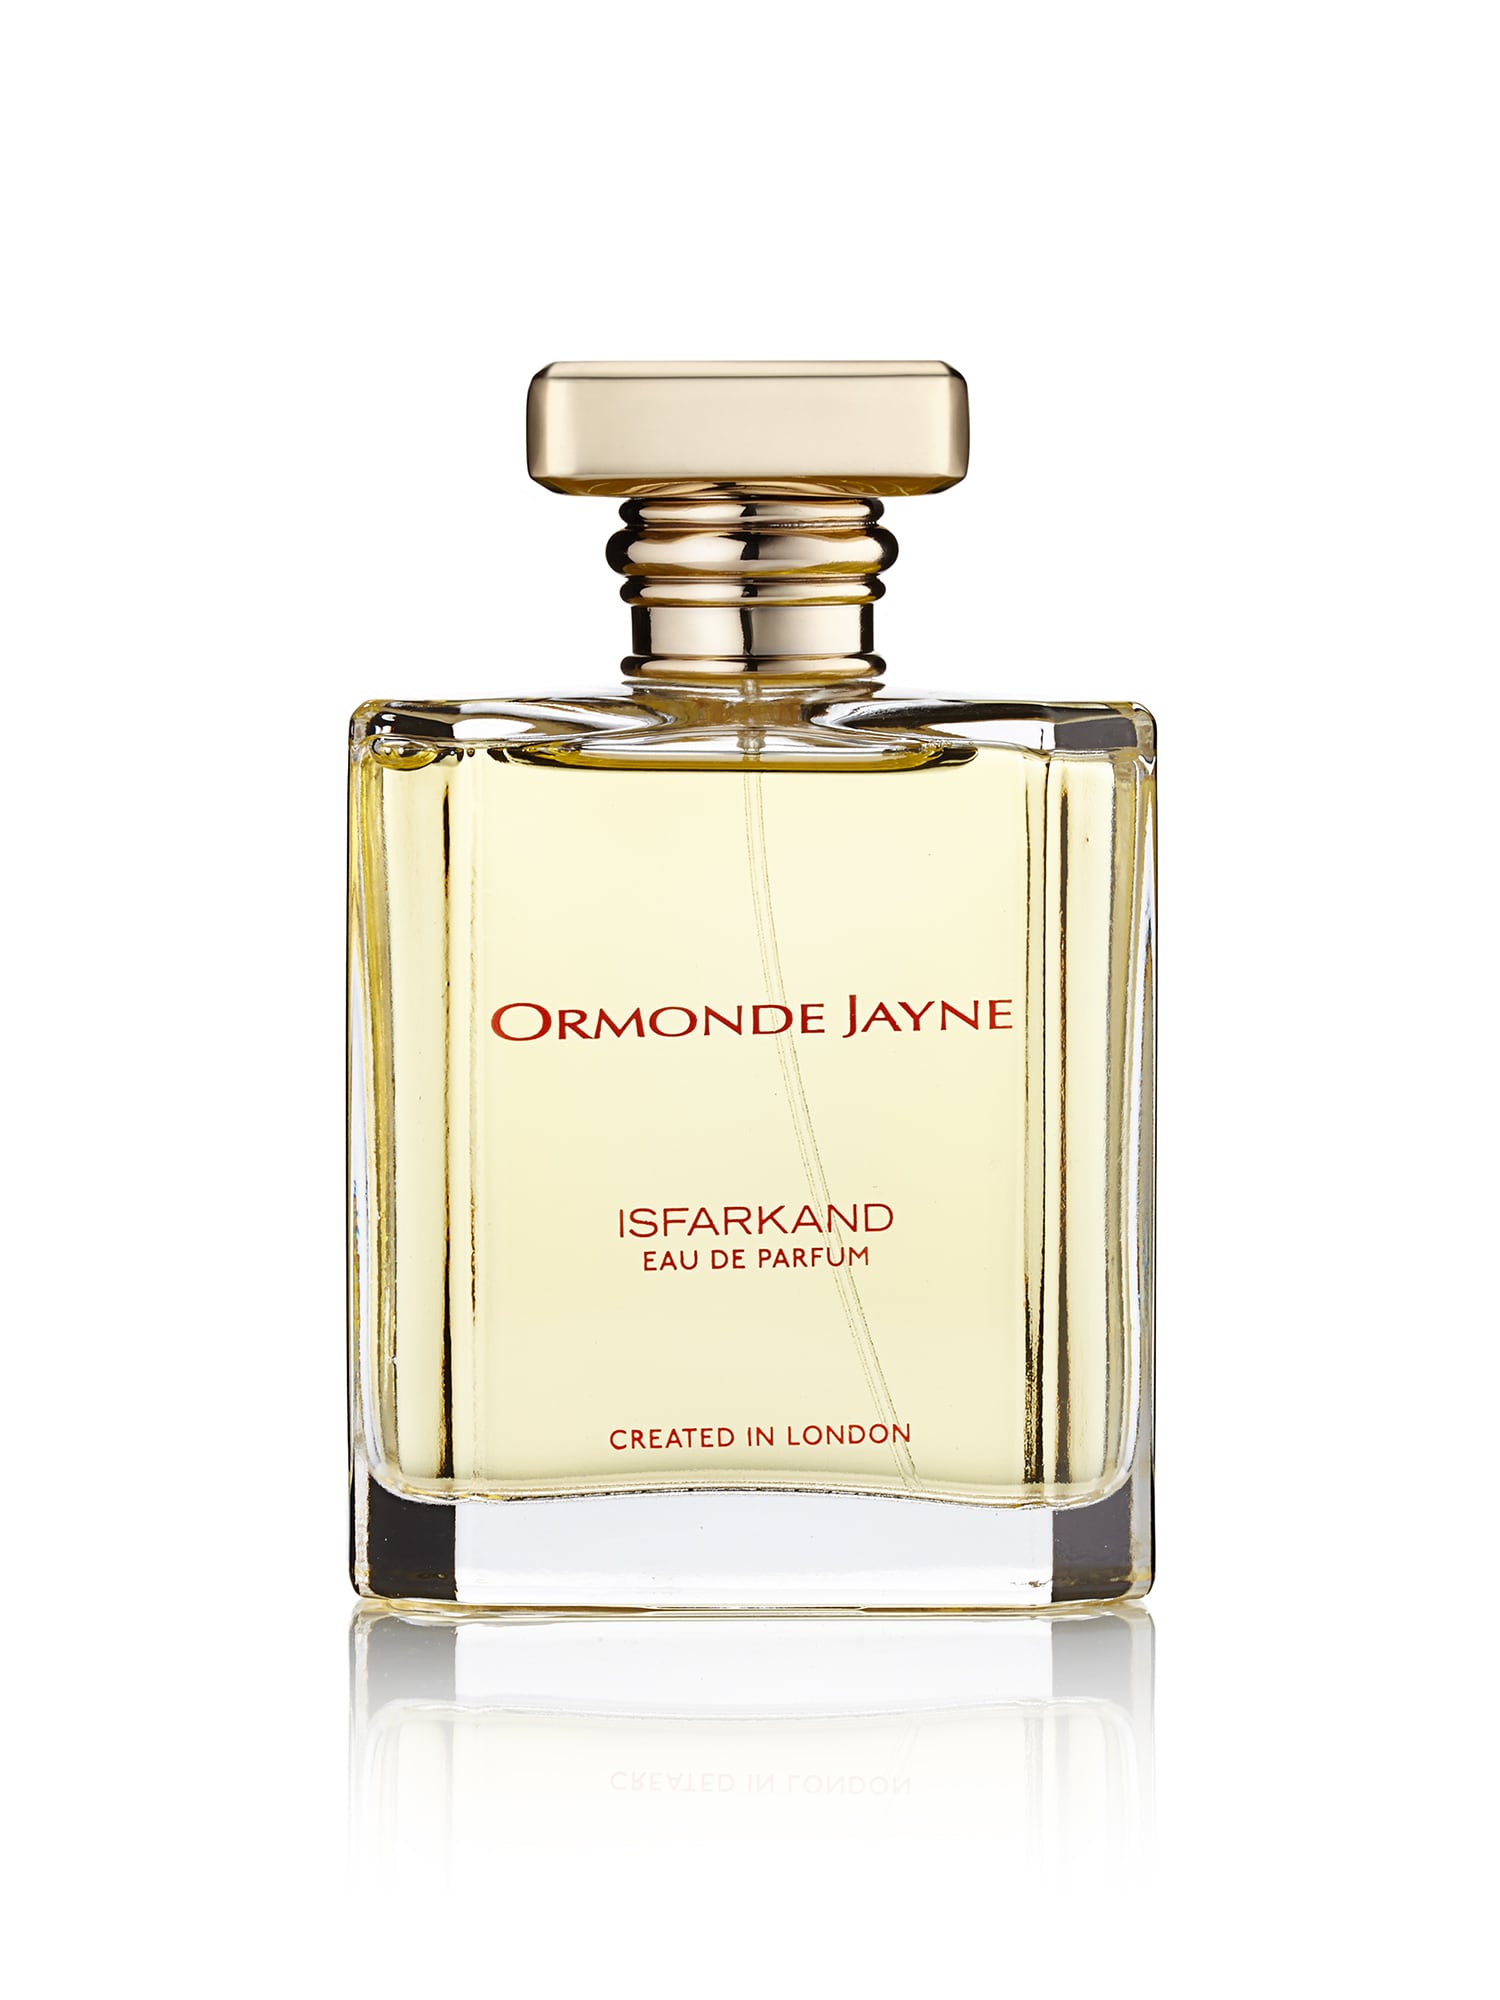 ORMONDE JAYNE Isfarkand Eau De Parfum 50ml